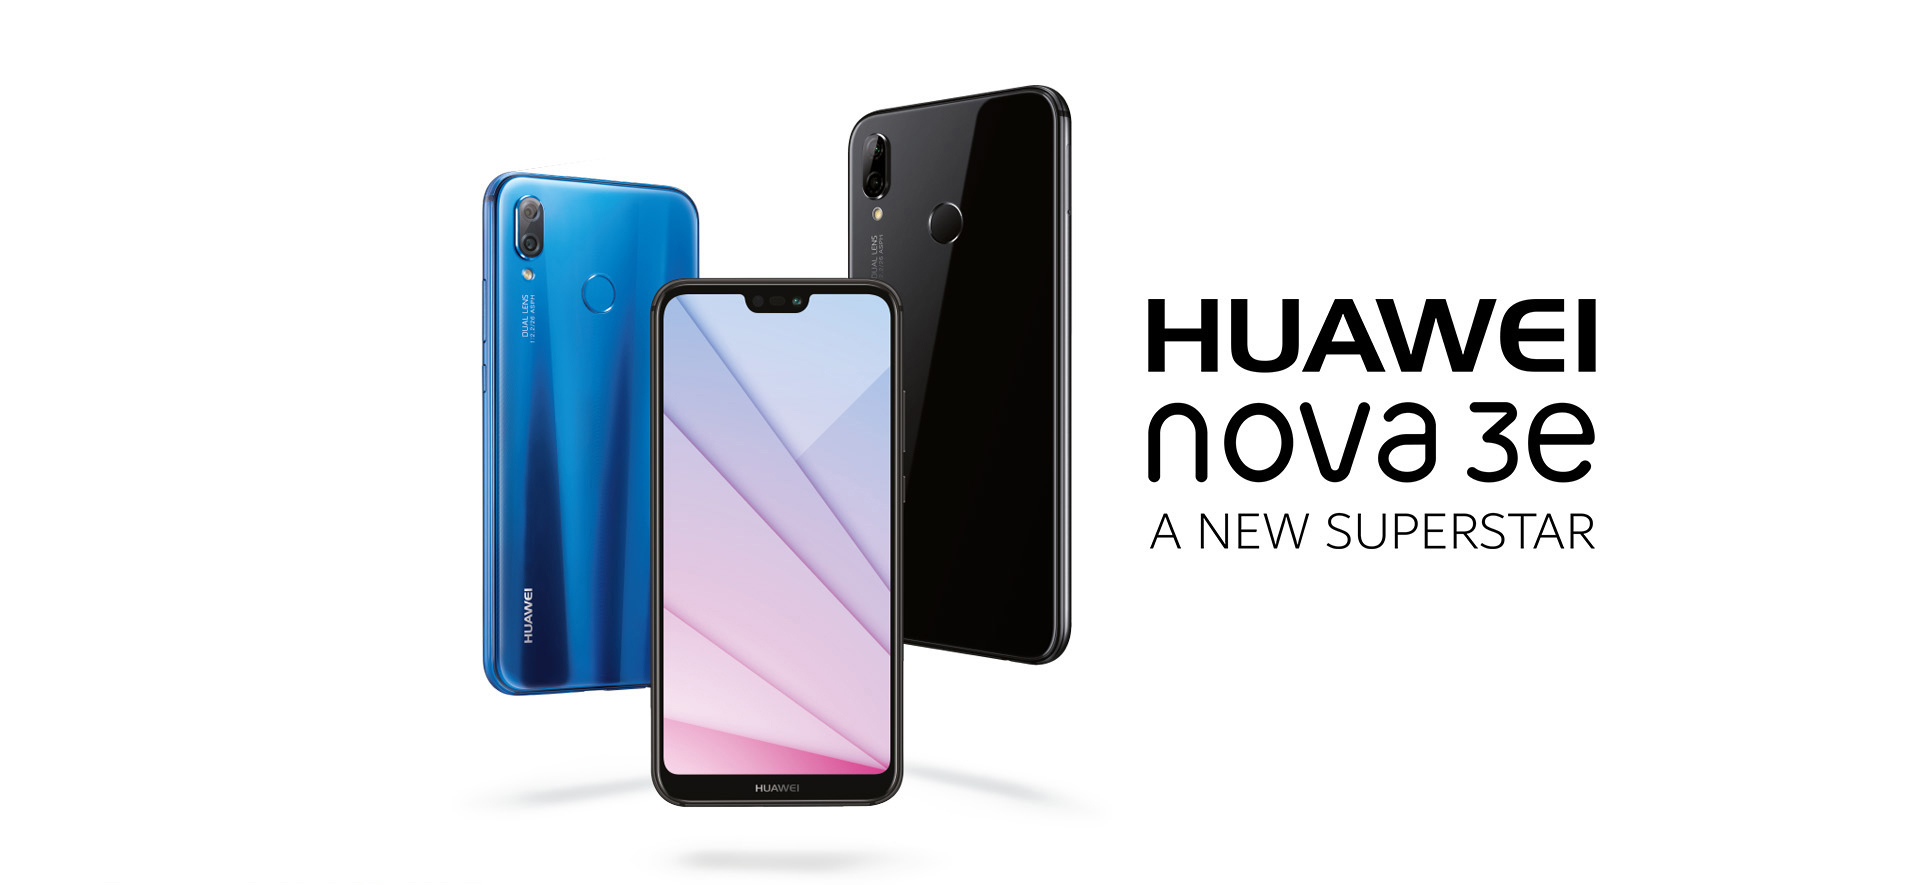 HUAWEI nova 3e back and front display